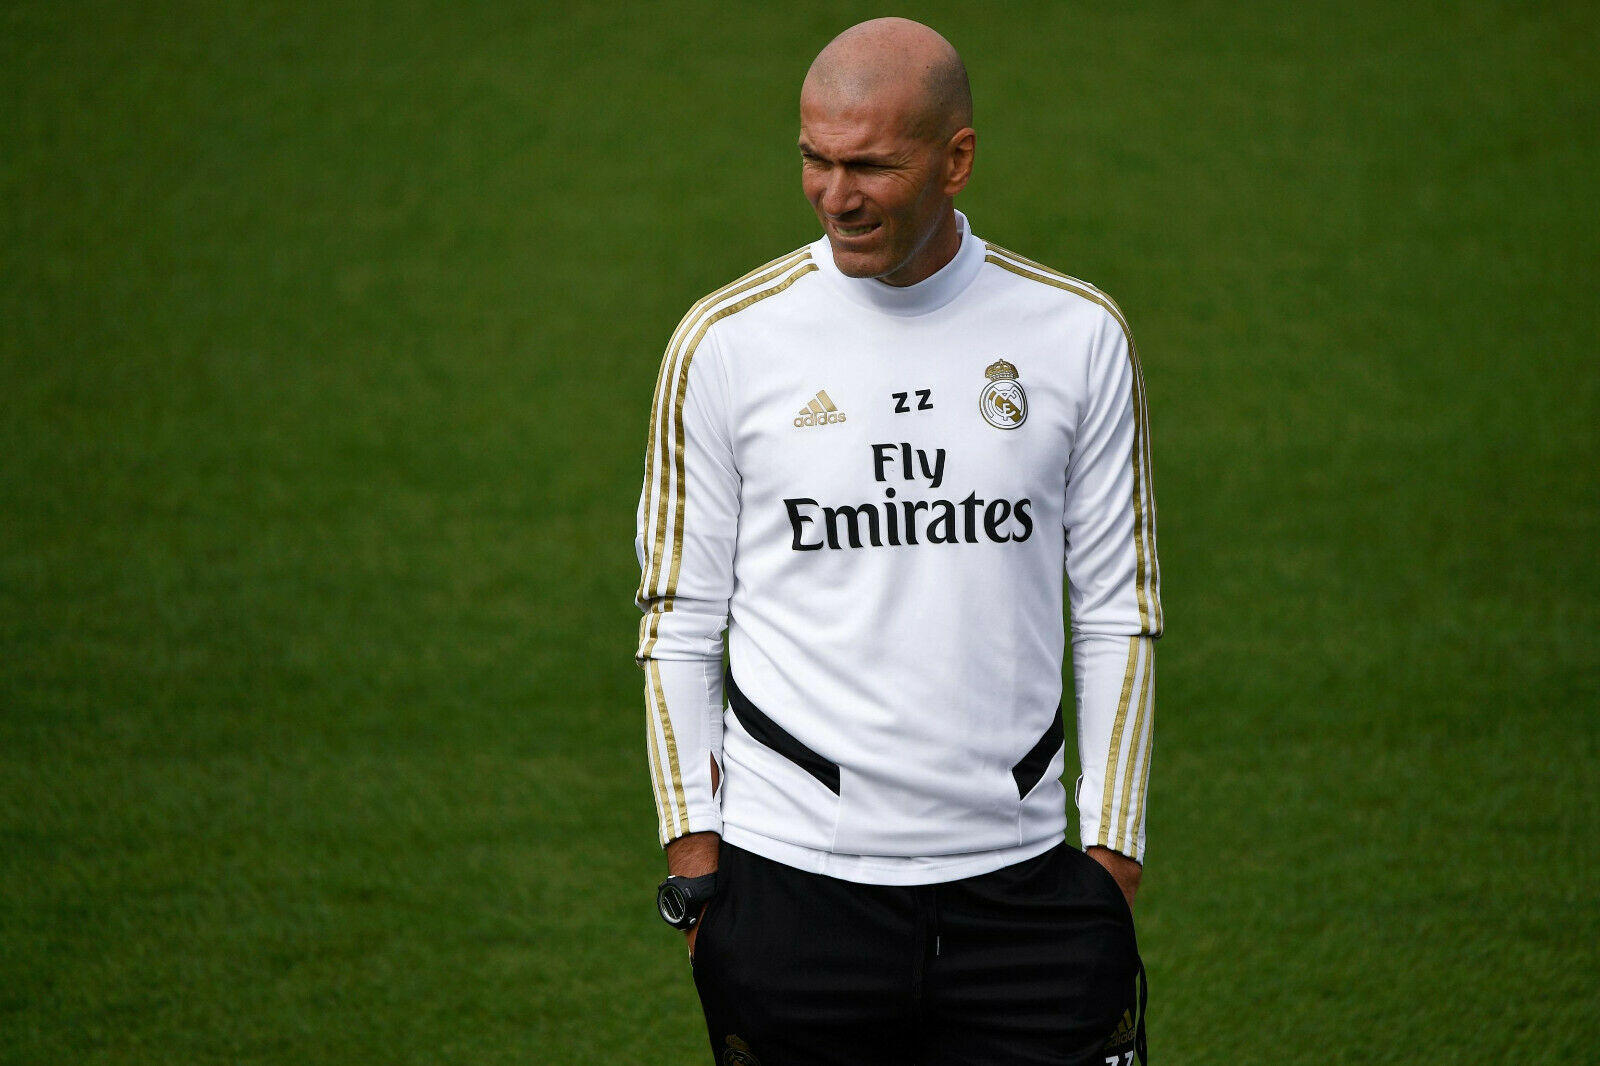 Rare Zinedine Zidane Match Issue Real Madrid Training Sweater, as worn by Zidane